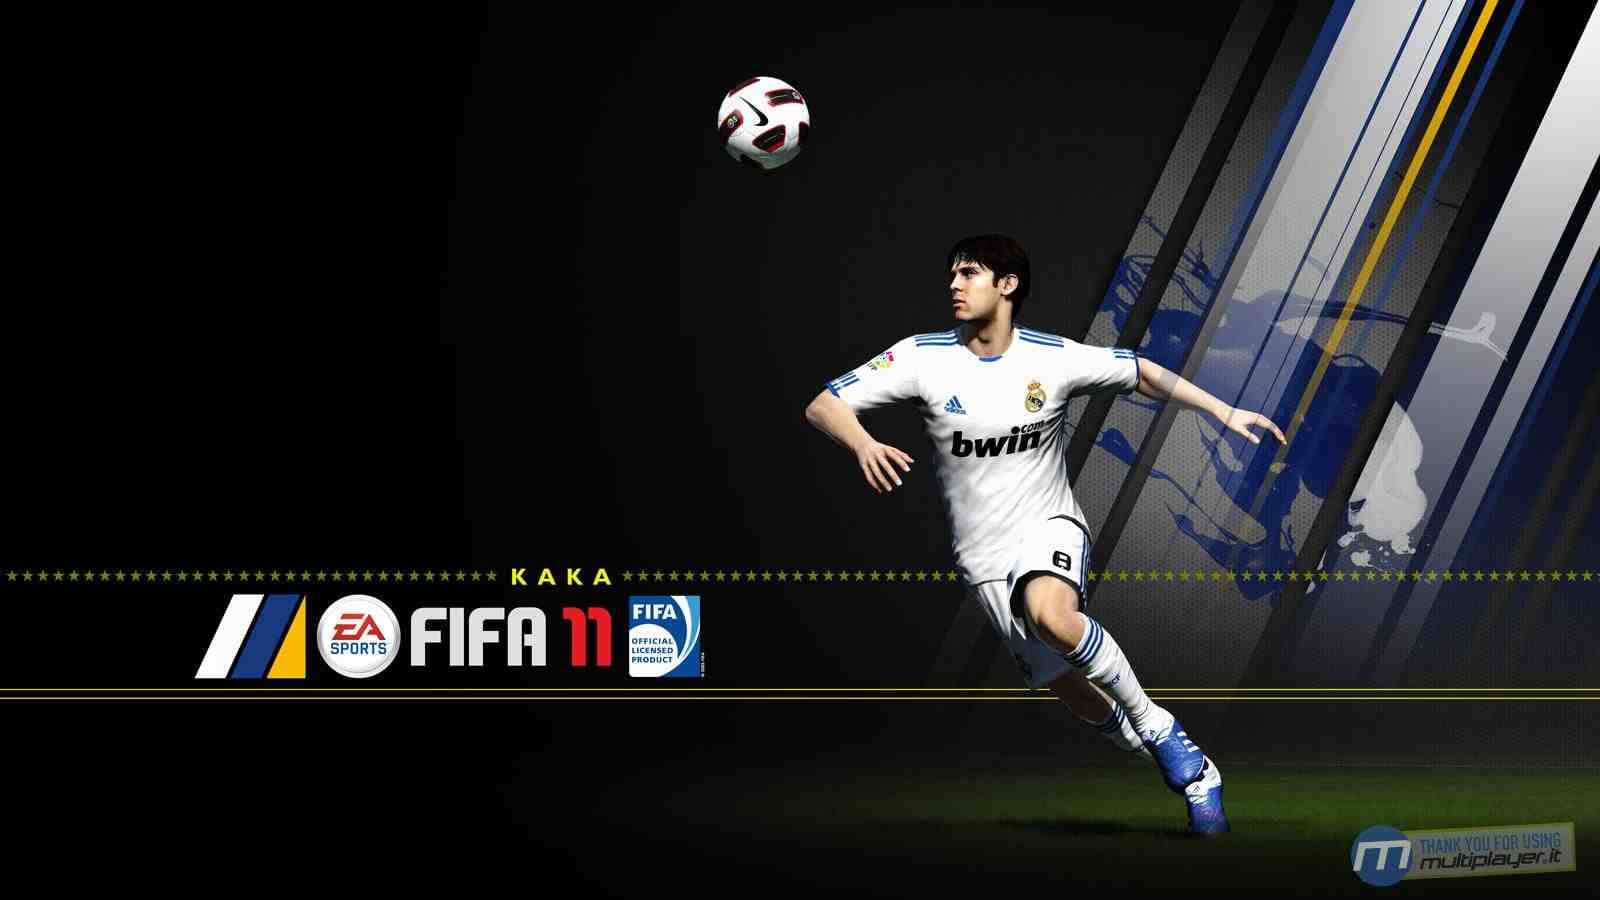 FIFA 11 Wallpaper For Mac Download